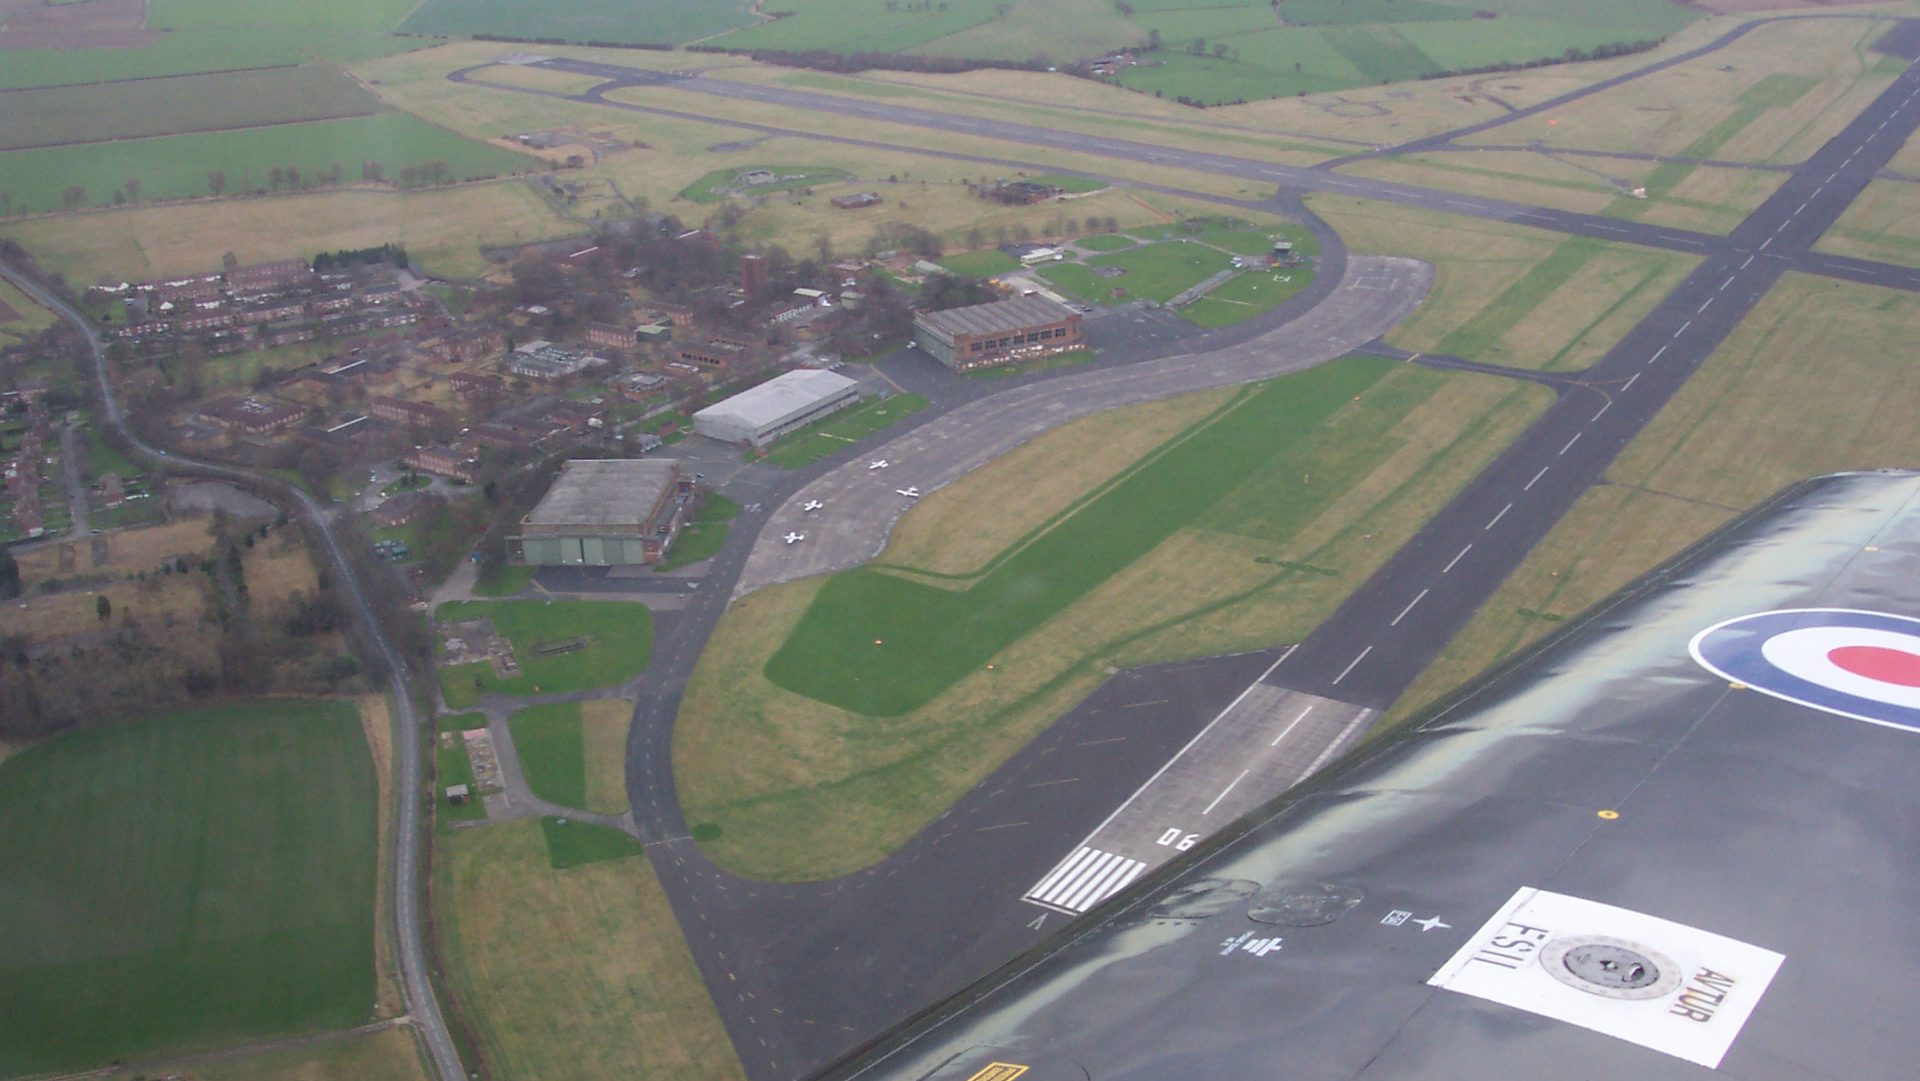 Church Fenton airfield sold